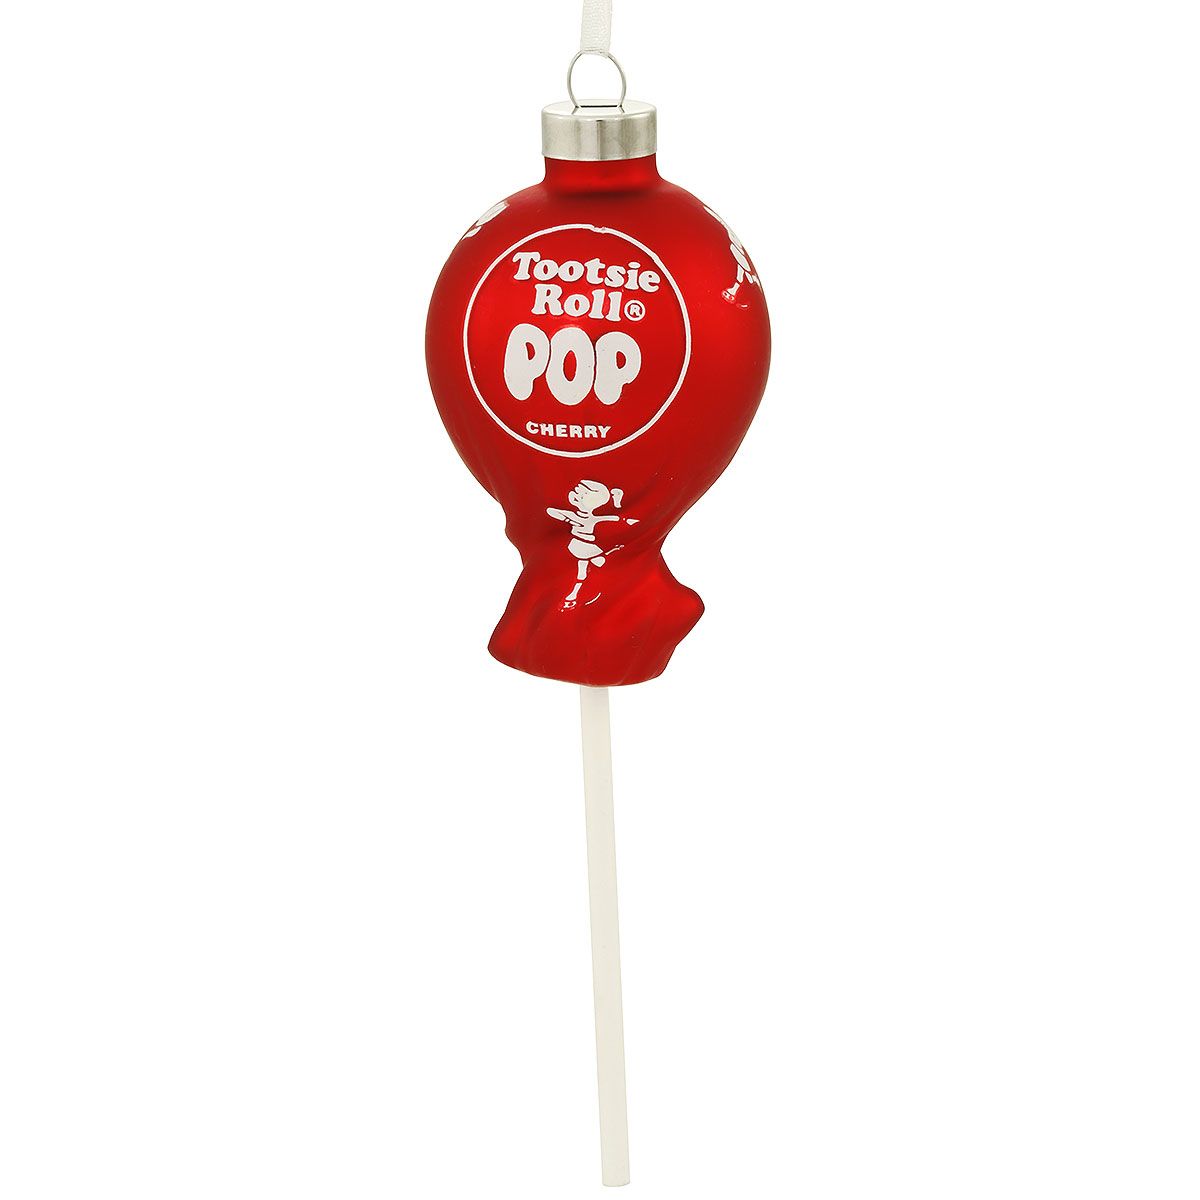 Cherry Tootsie Roll Pop Ornament